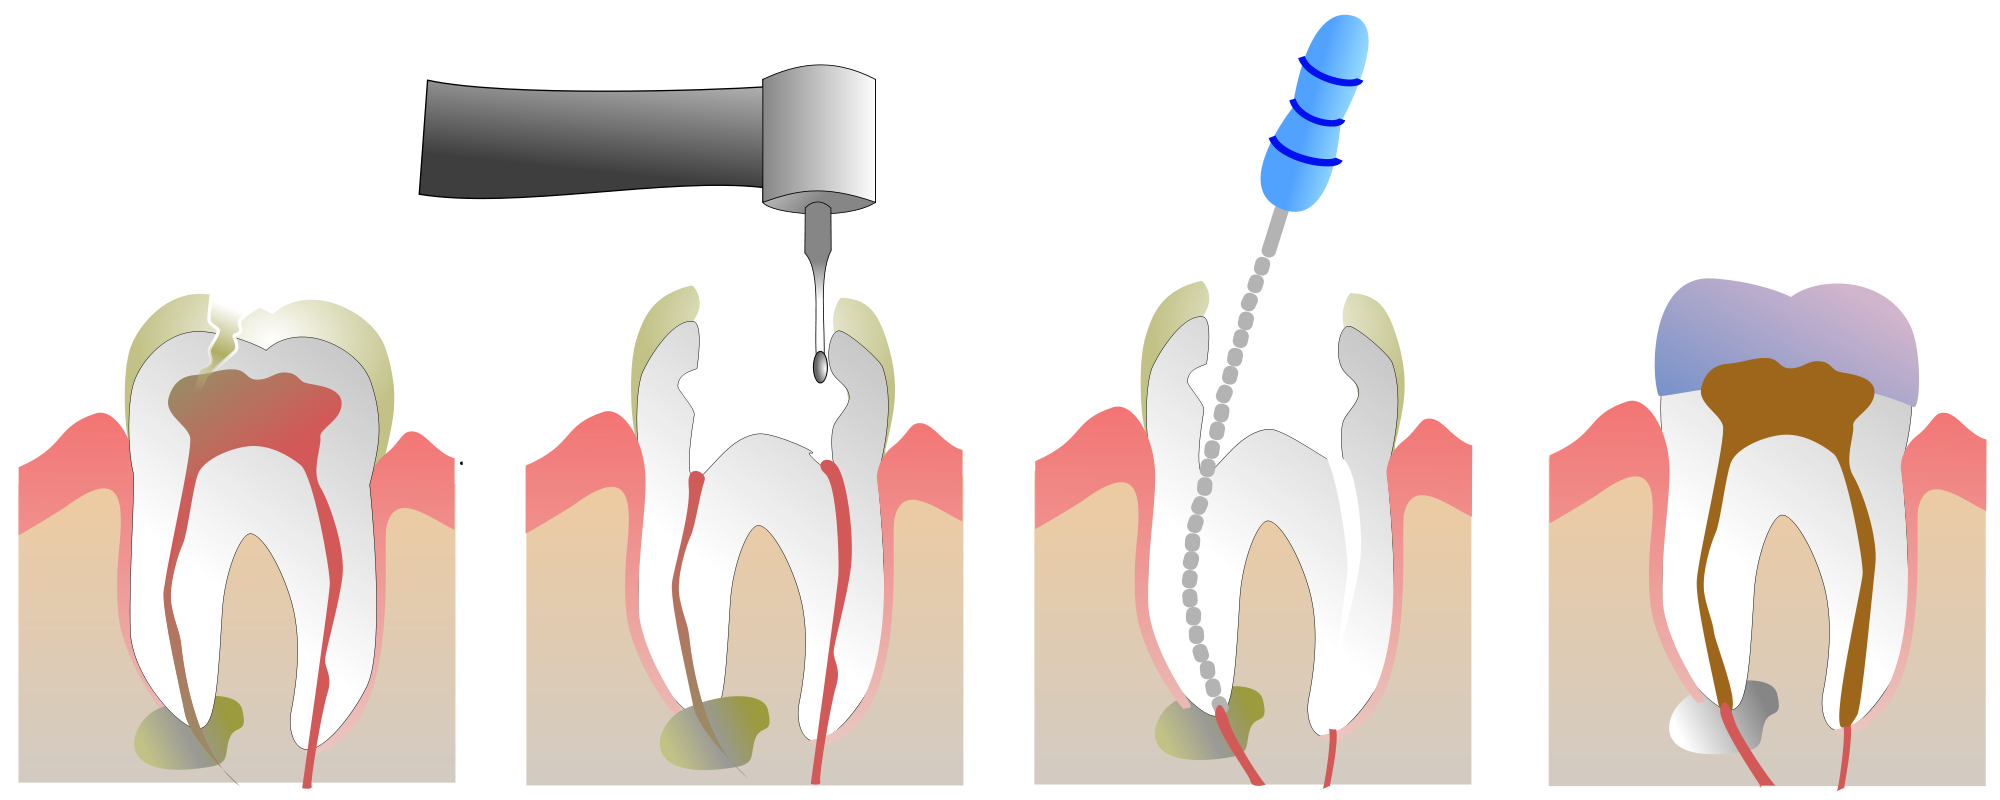 4 Канальный пульпит зуба. Пульпит 2 канального зуба. Периодонтит 1 канальный.